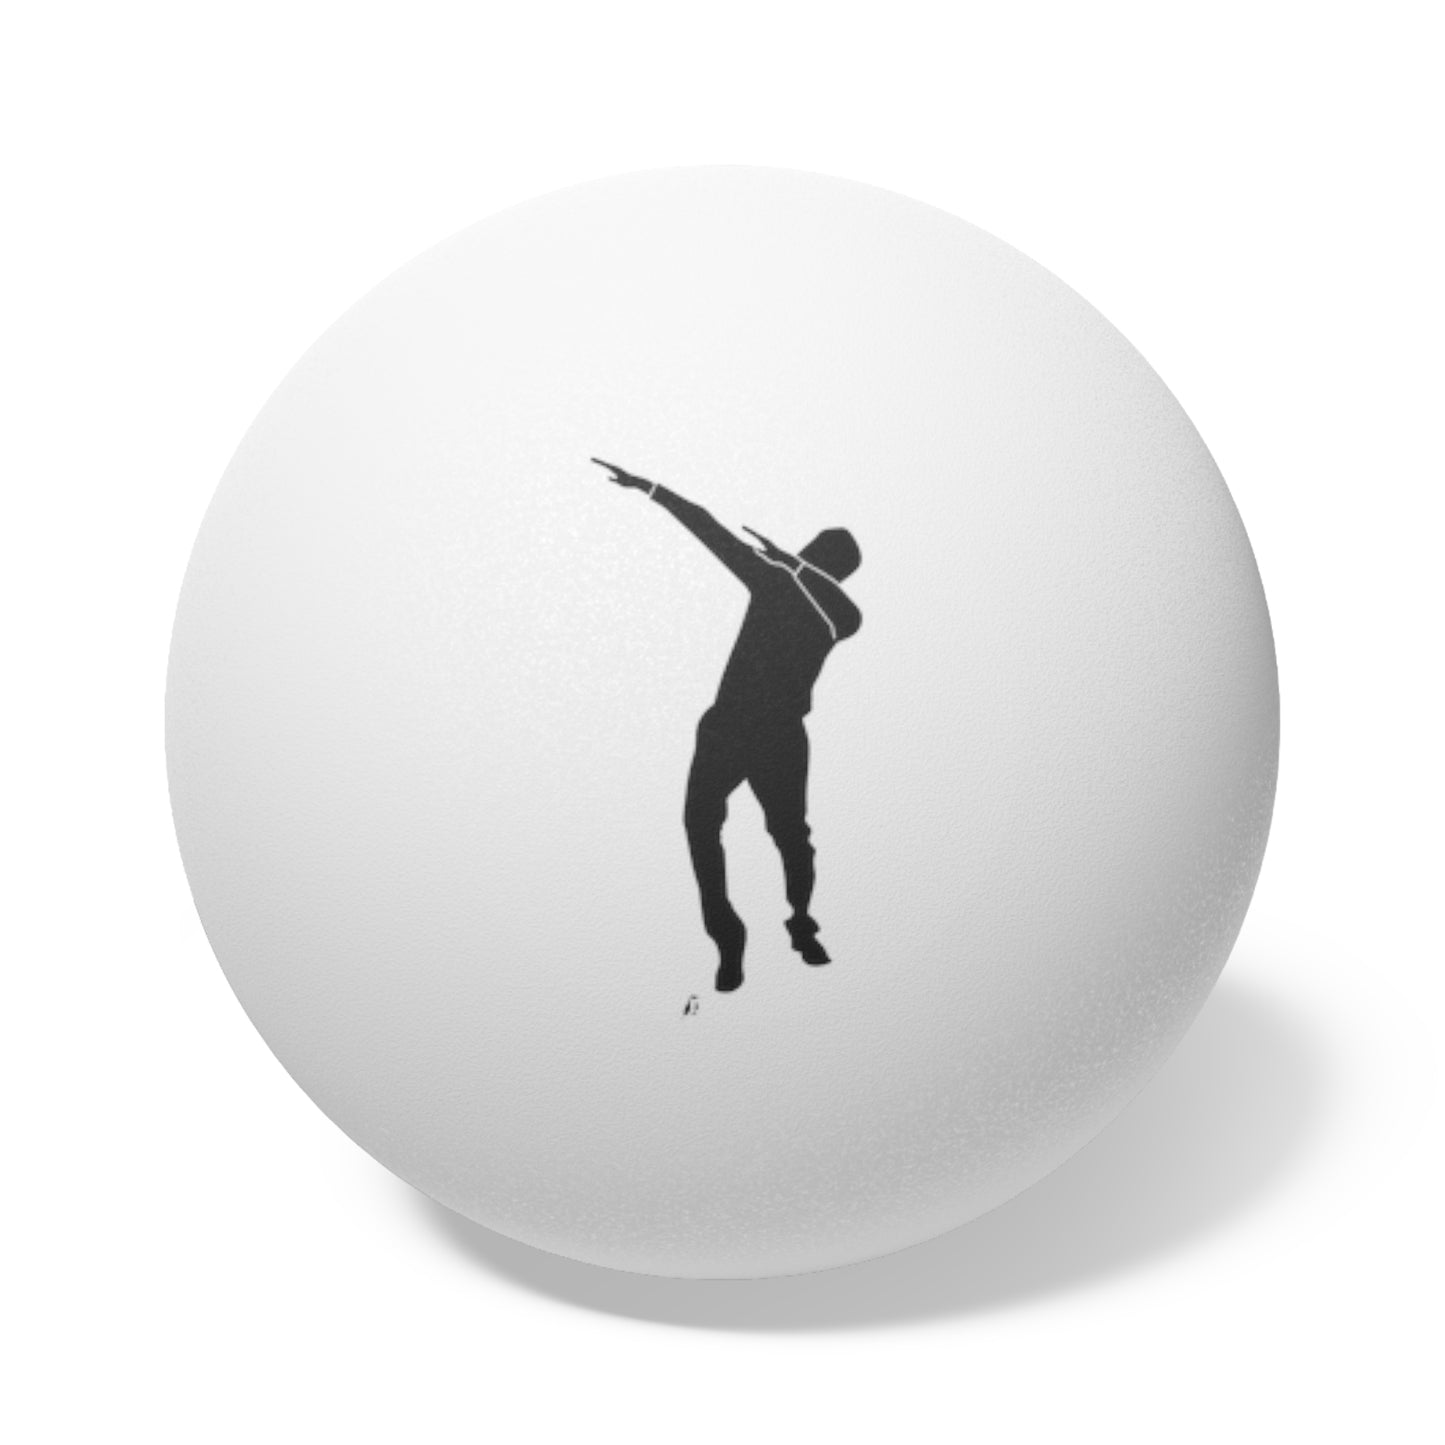 Ping Pong Balls, 6 pcs: Dance